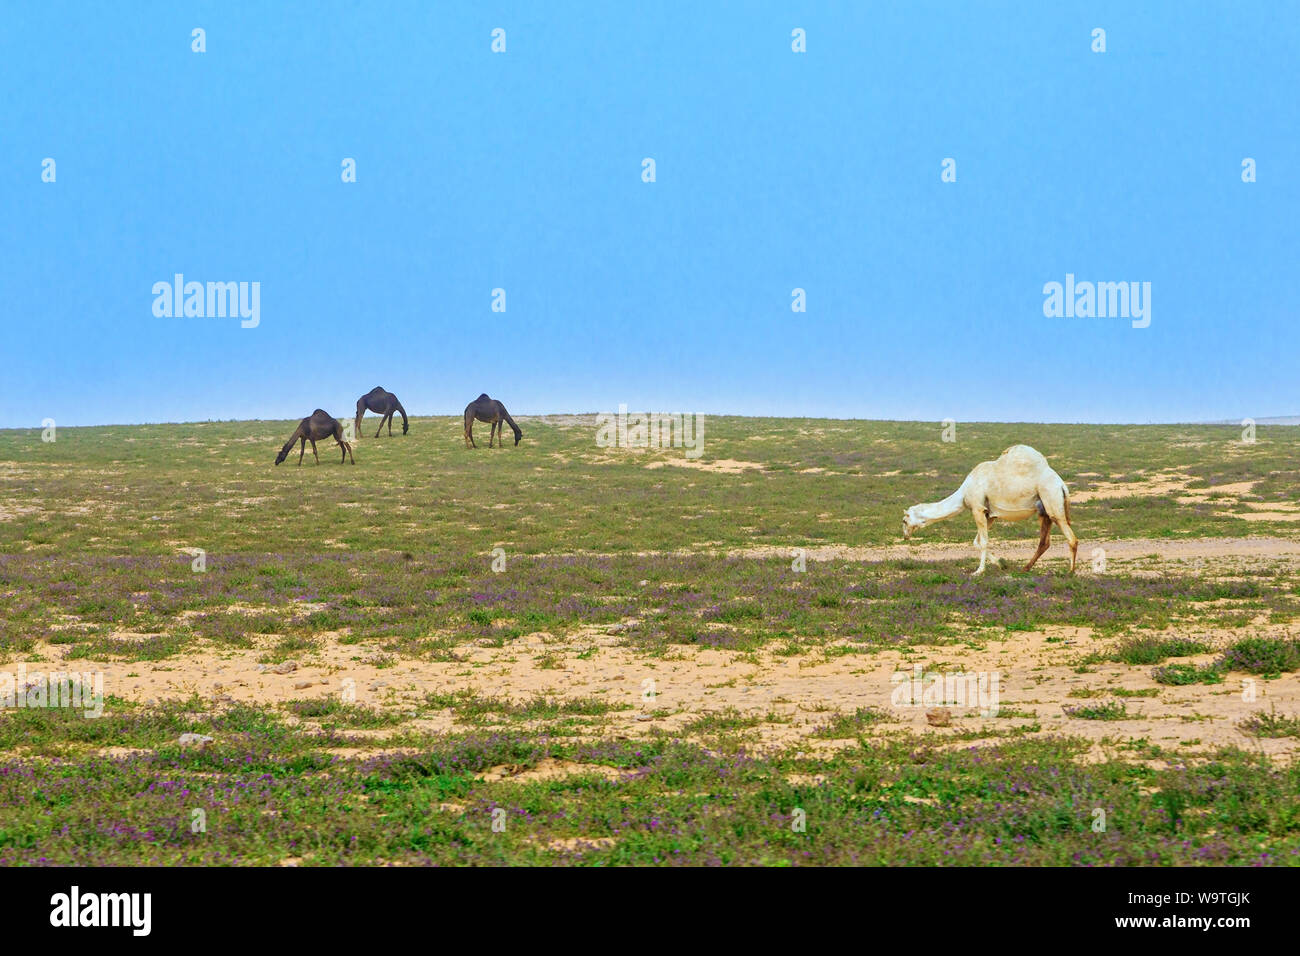 Four camels grazing in the desert, Saudi Arabia Stock Photo